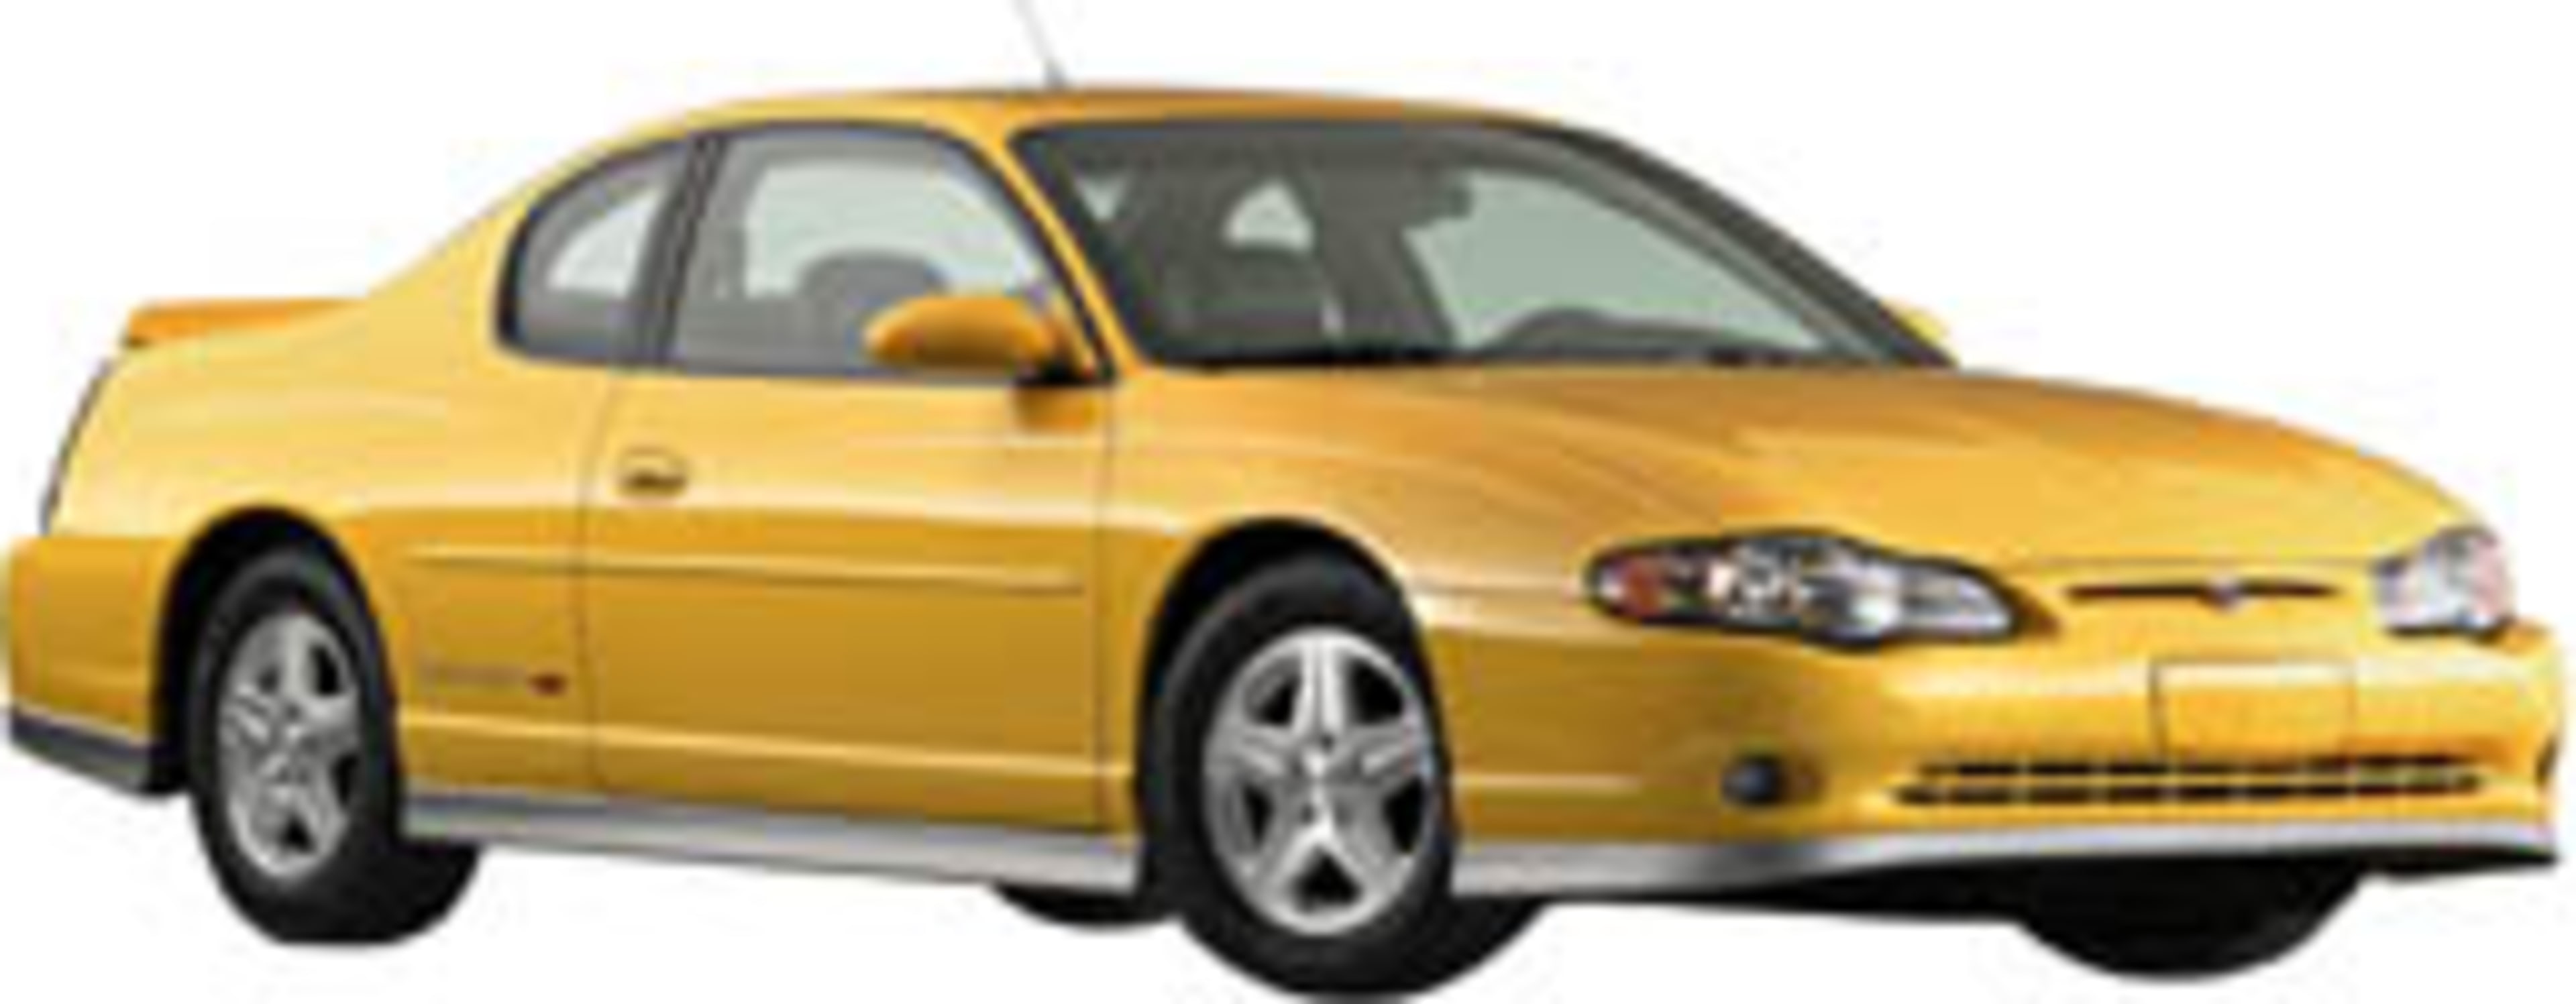 2004 Chevrolet Monte Carlo Service and Repair Manual